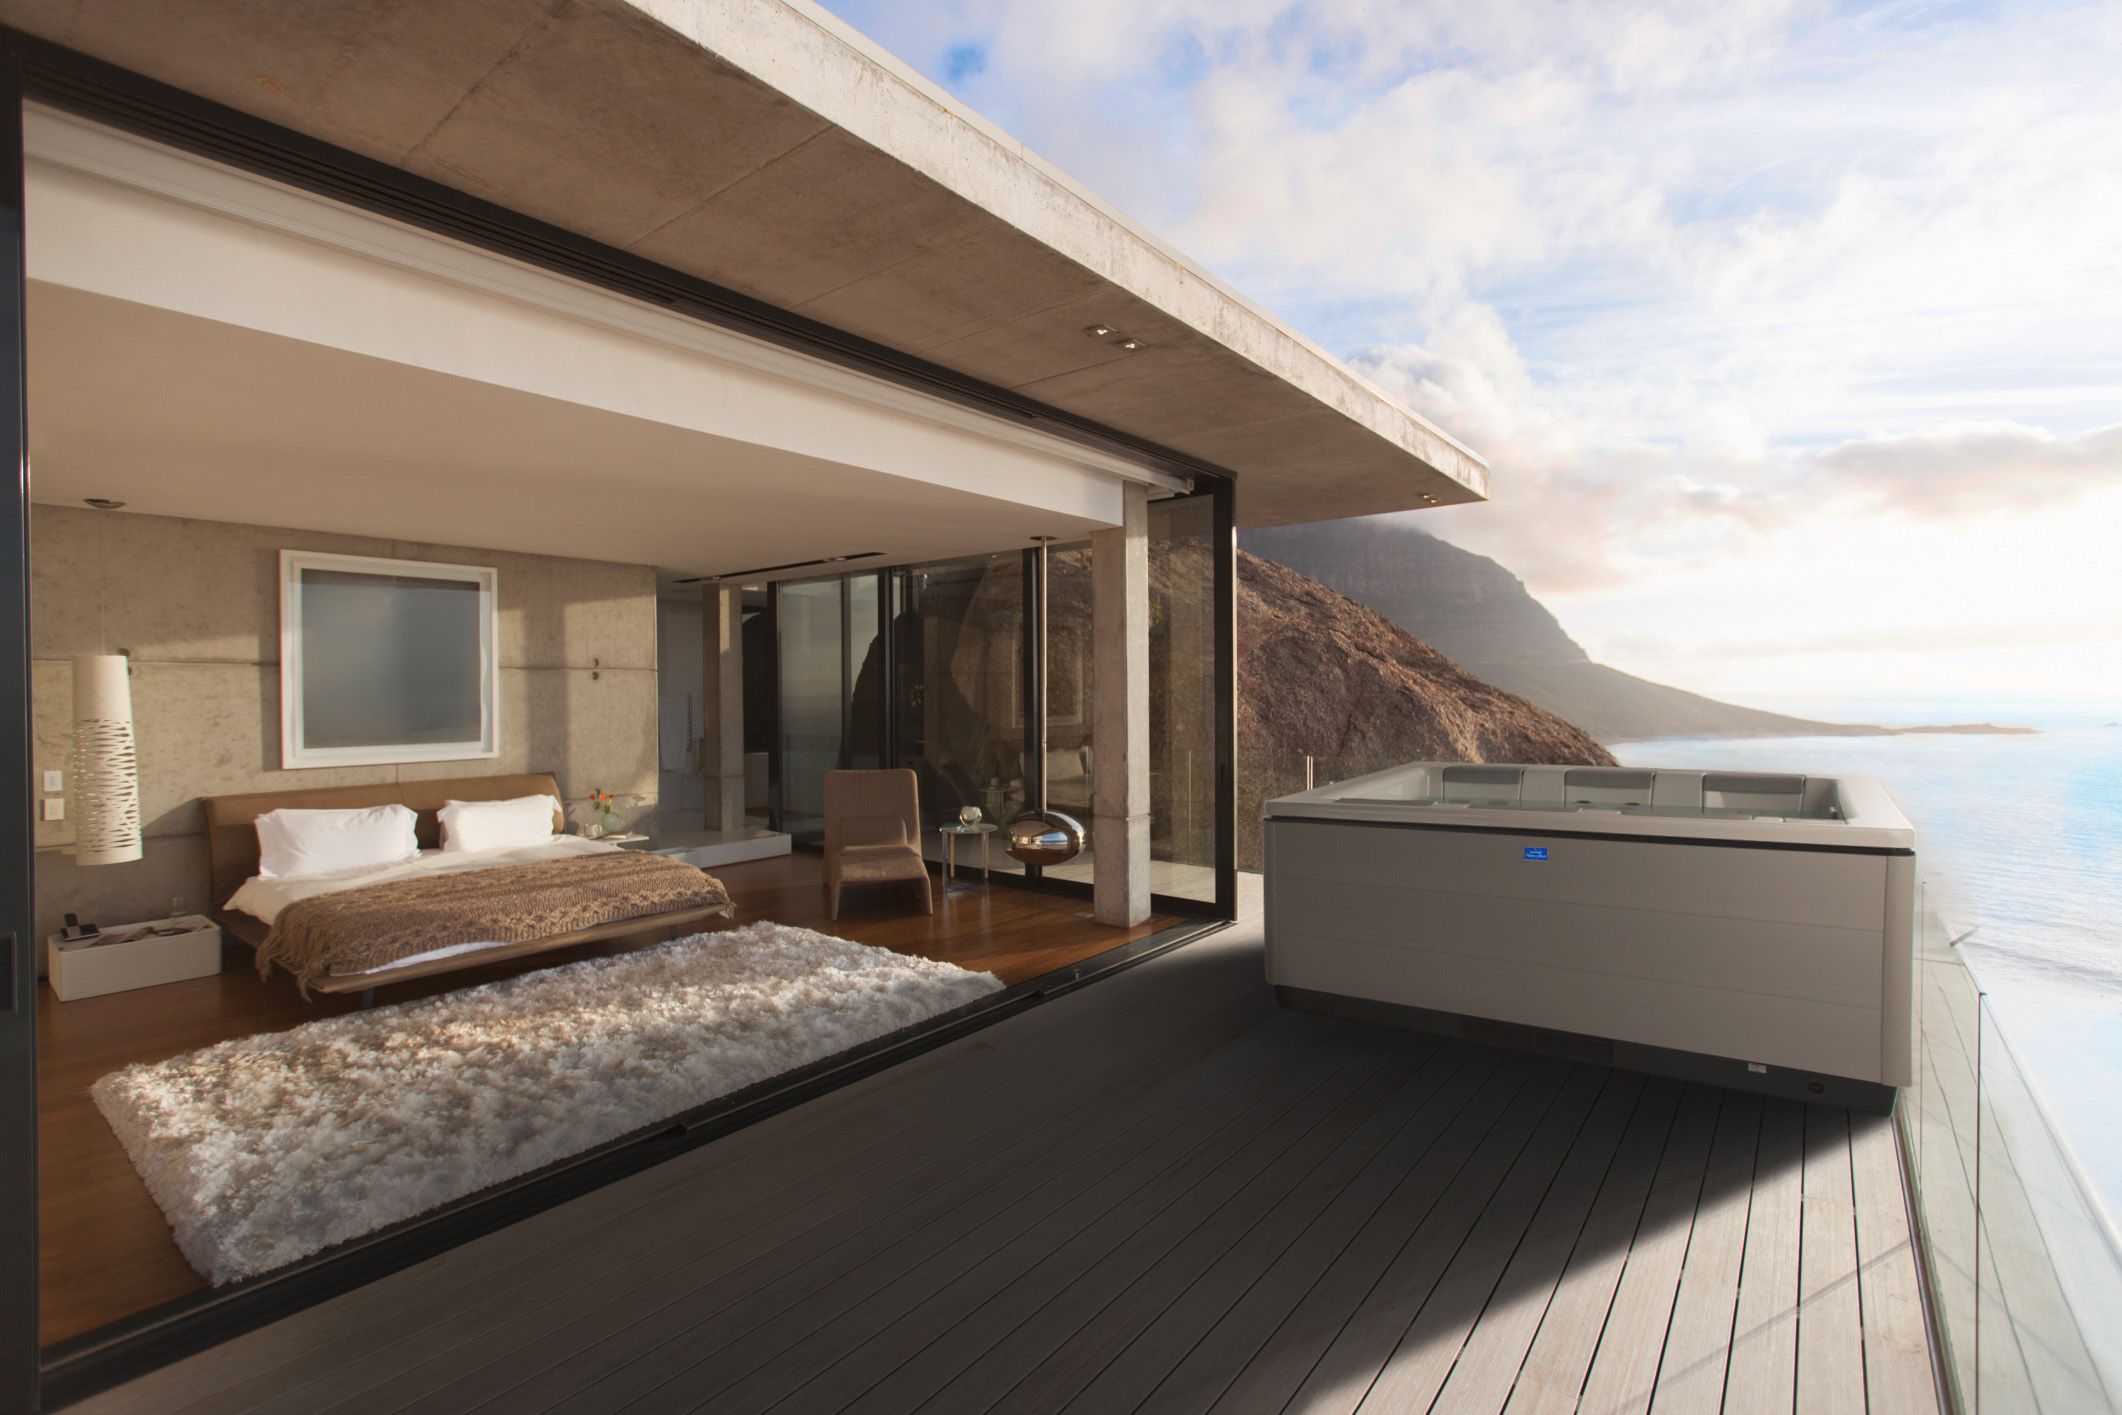 Villa aan zee. Room with a view. Slaapkamer met balkon met whirlpool just silence van Villeroy & Boch #interior #luxury